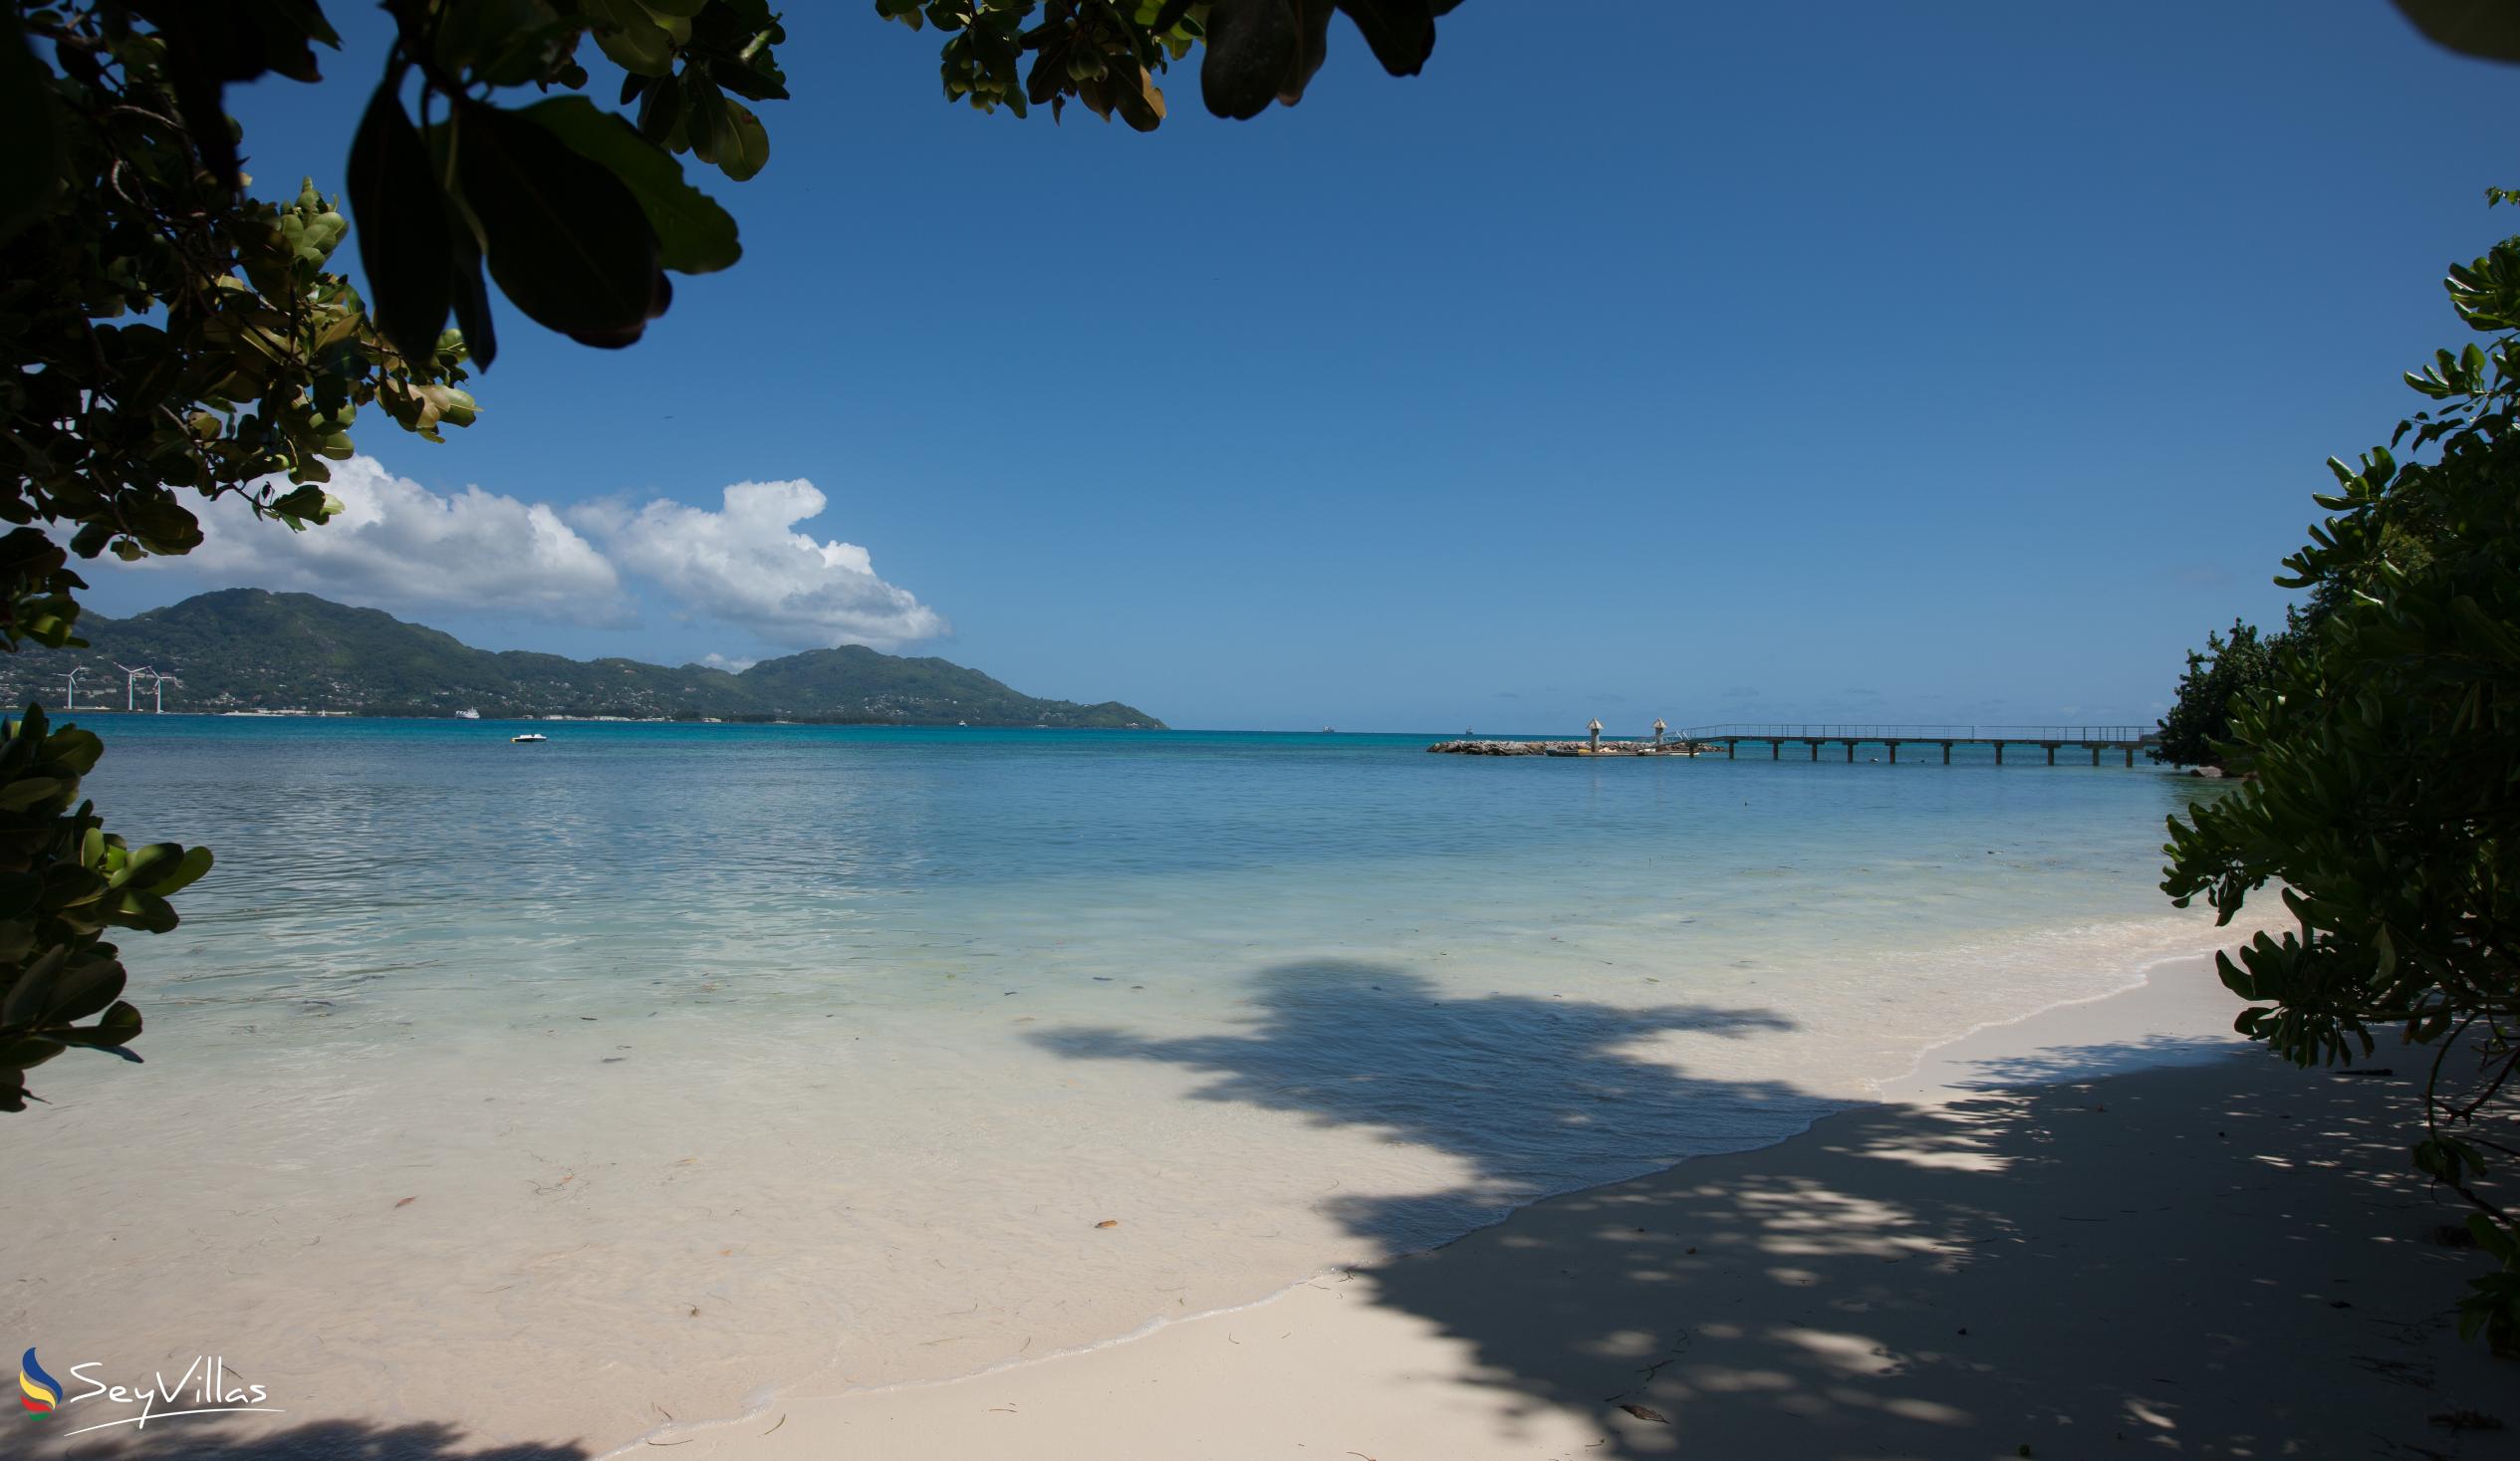 Photo 80: L'Habitation - Beaches - Cerf Island (Seychelles)